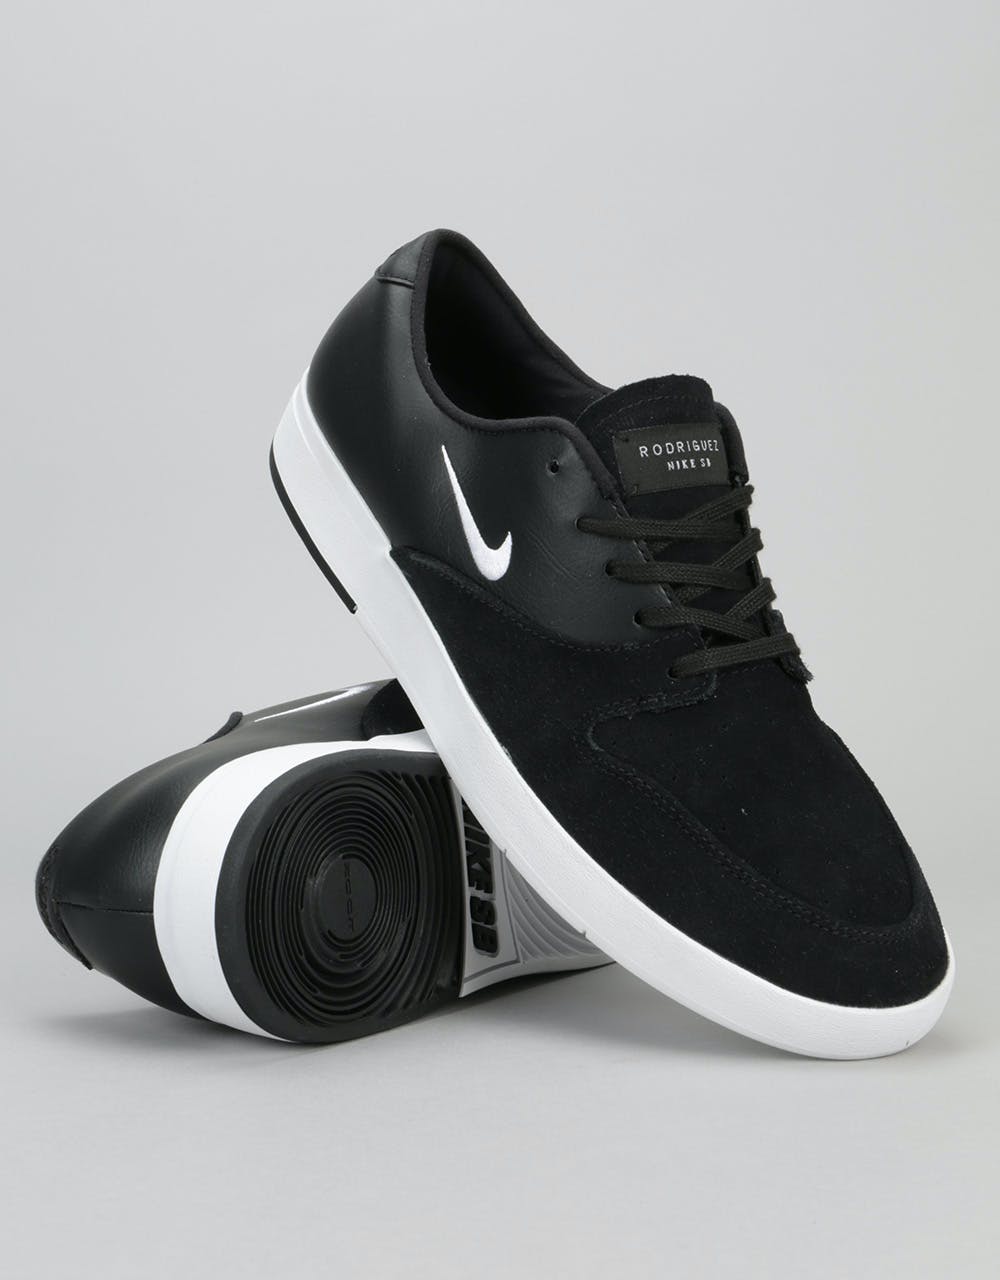 Nike SB Paul Rodriguez X Skate Shoes - Black/White